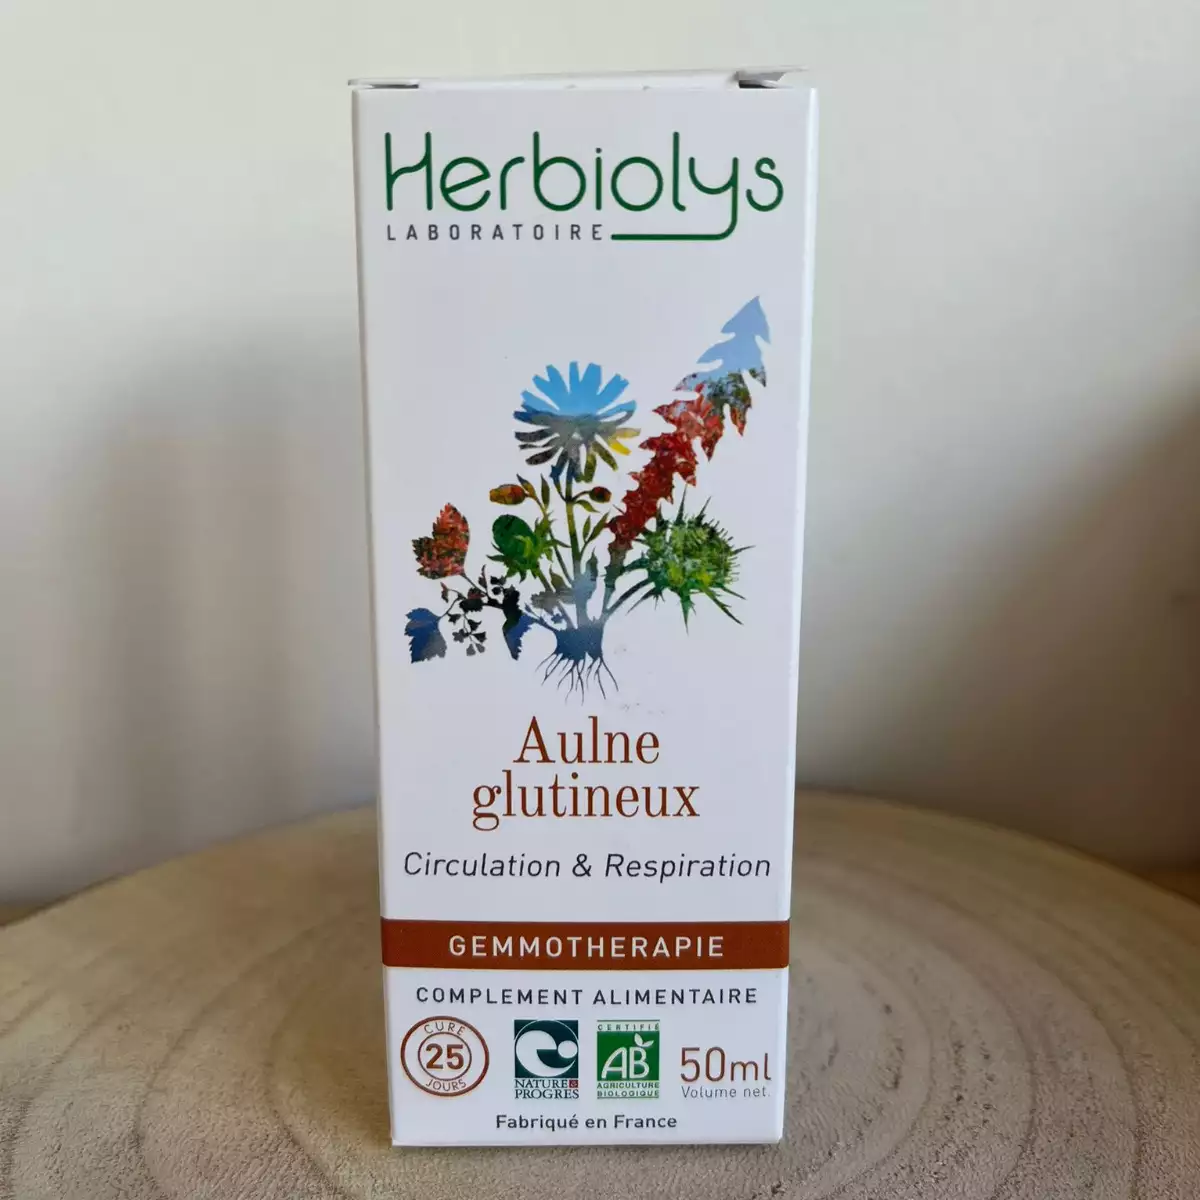 Aulne glutineux - Herbiolys